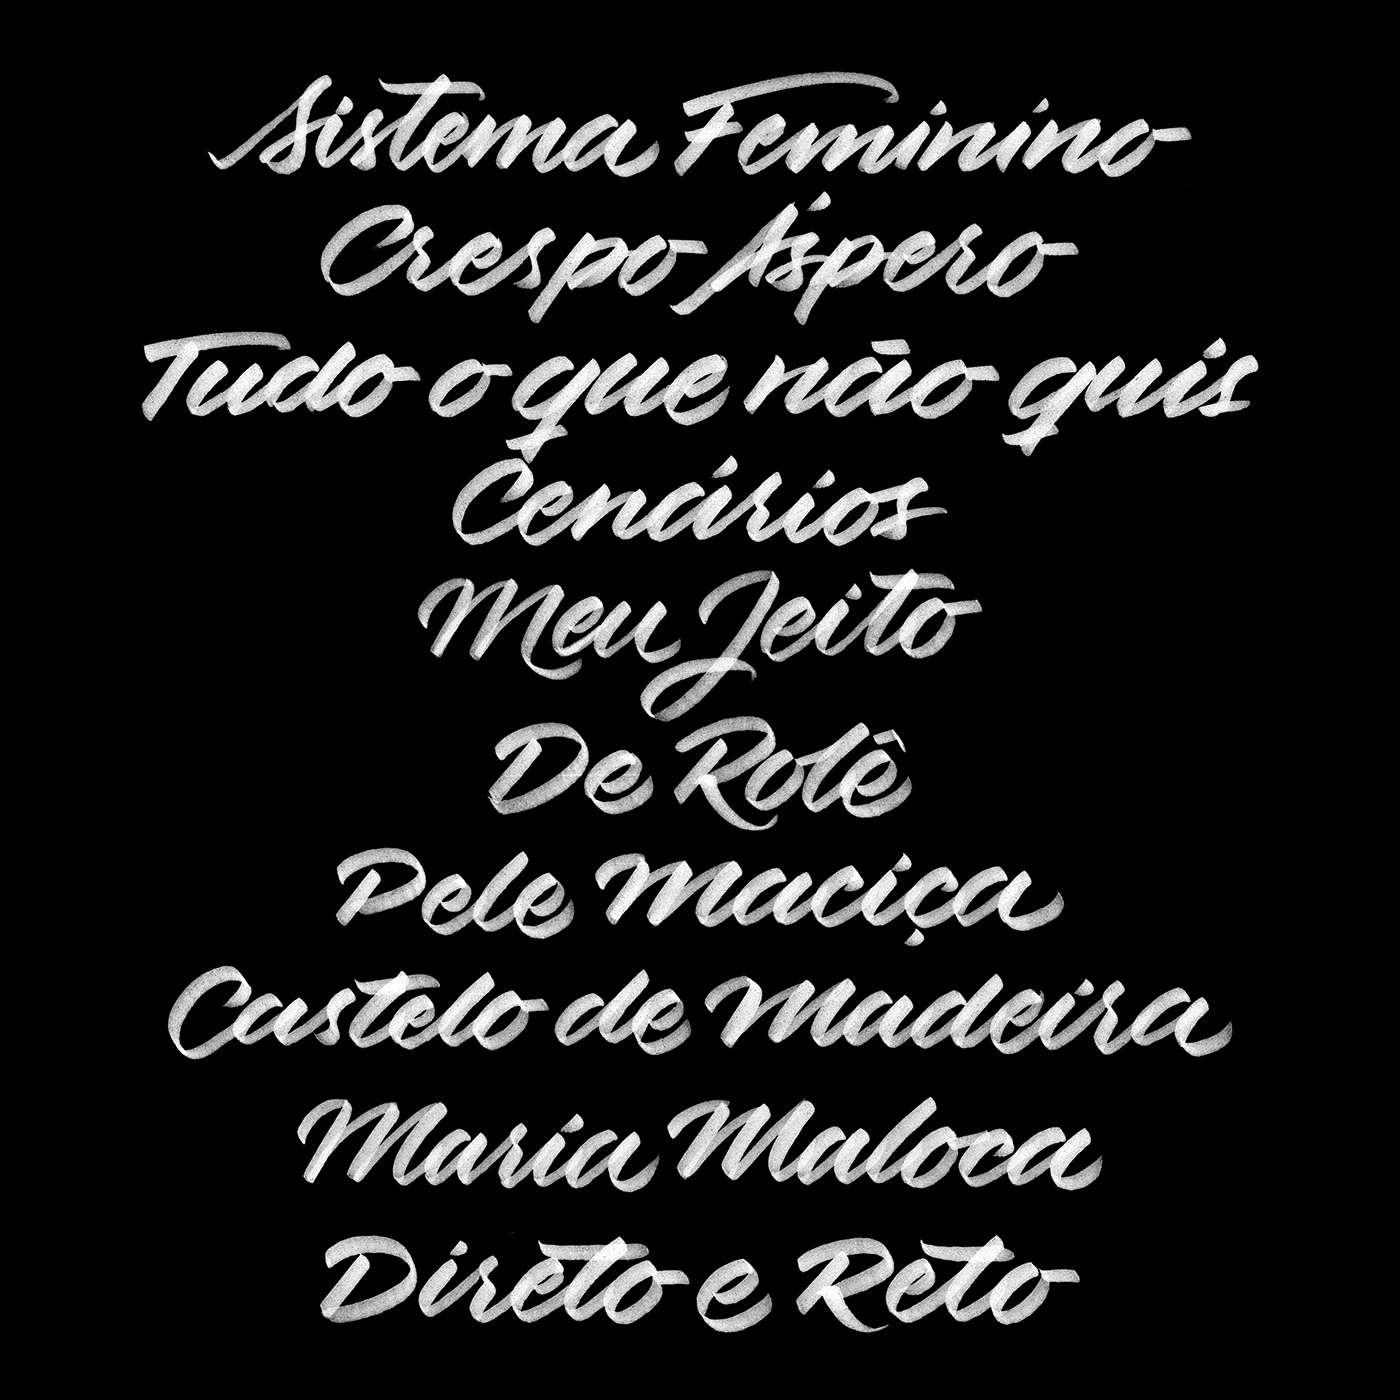 Títulos das músicas do álbum "Sistema Feminino" caligrafados.